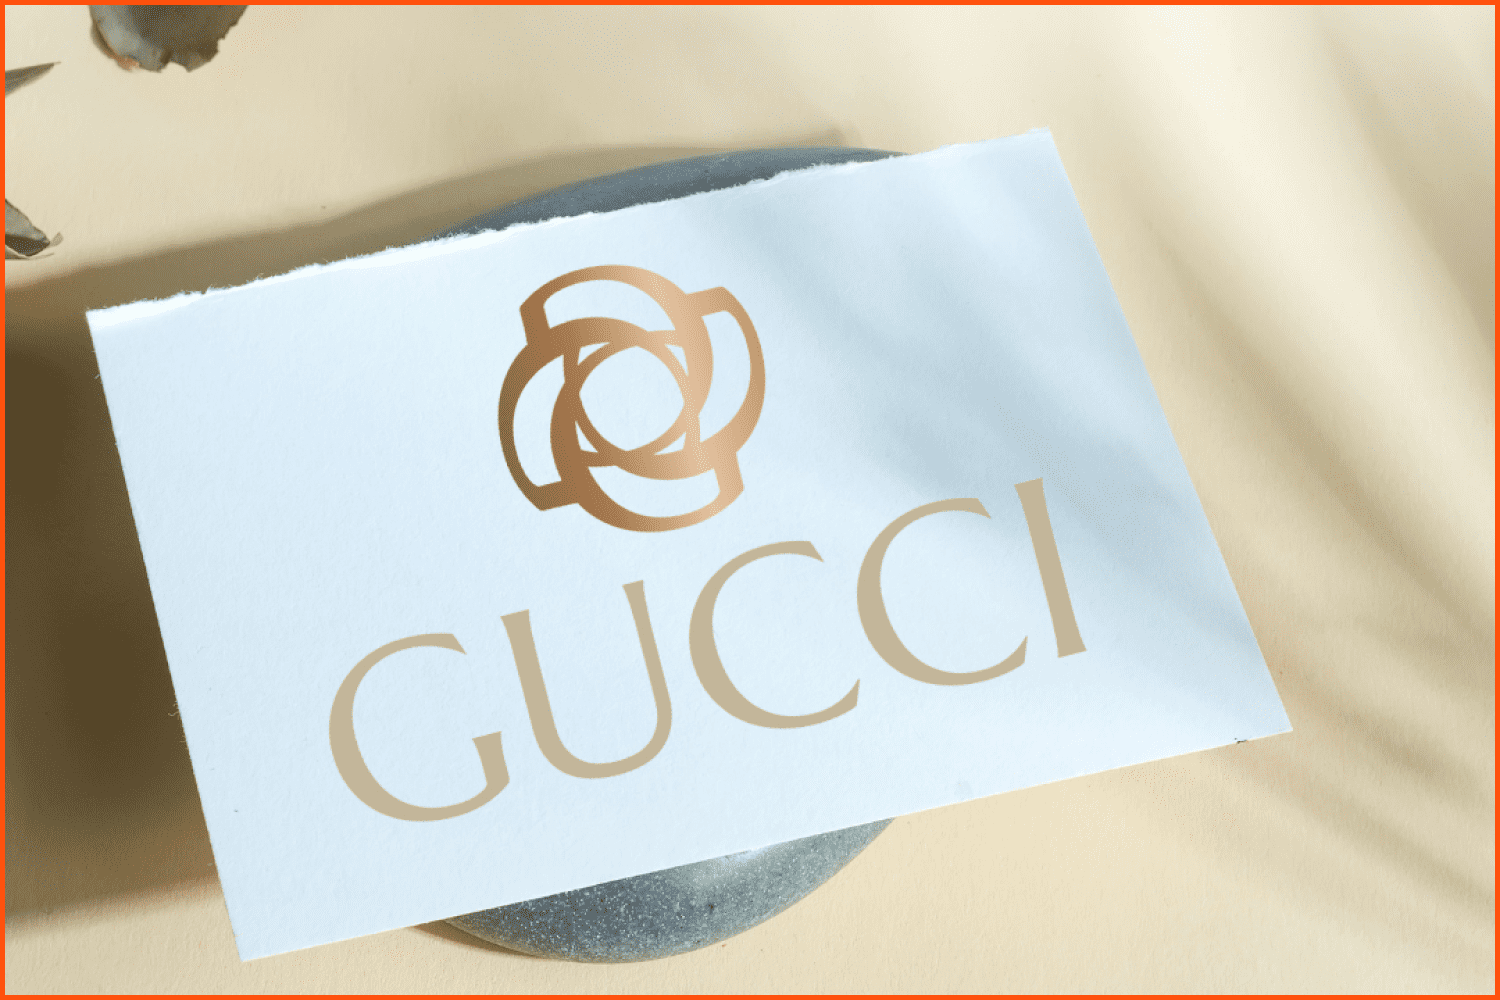 Stories behind Brands – Gucci